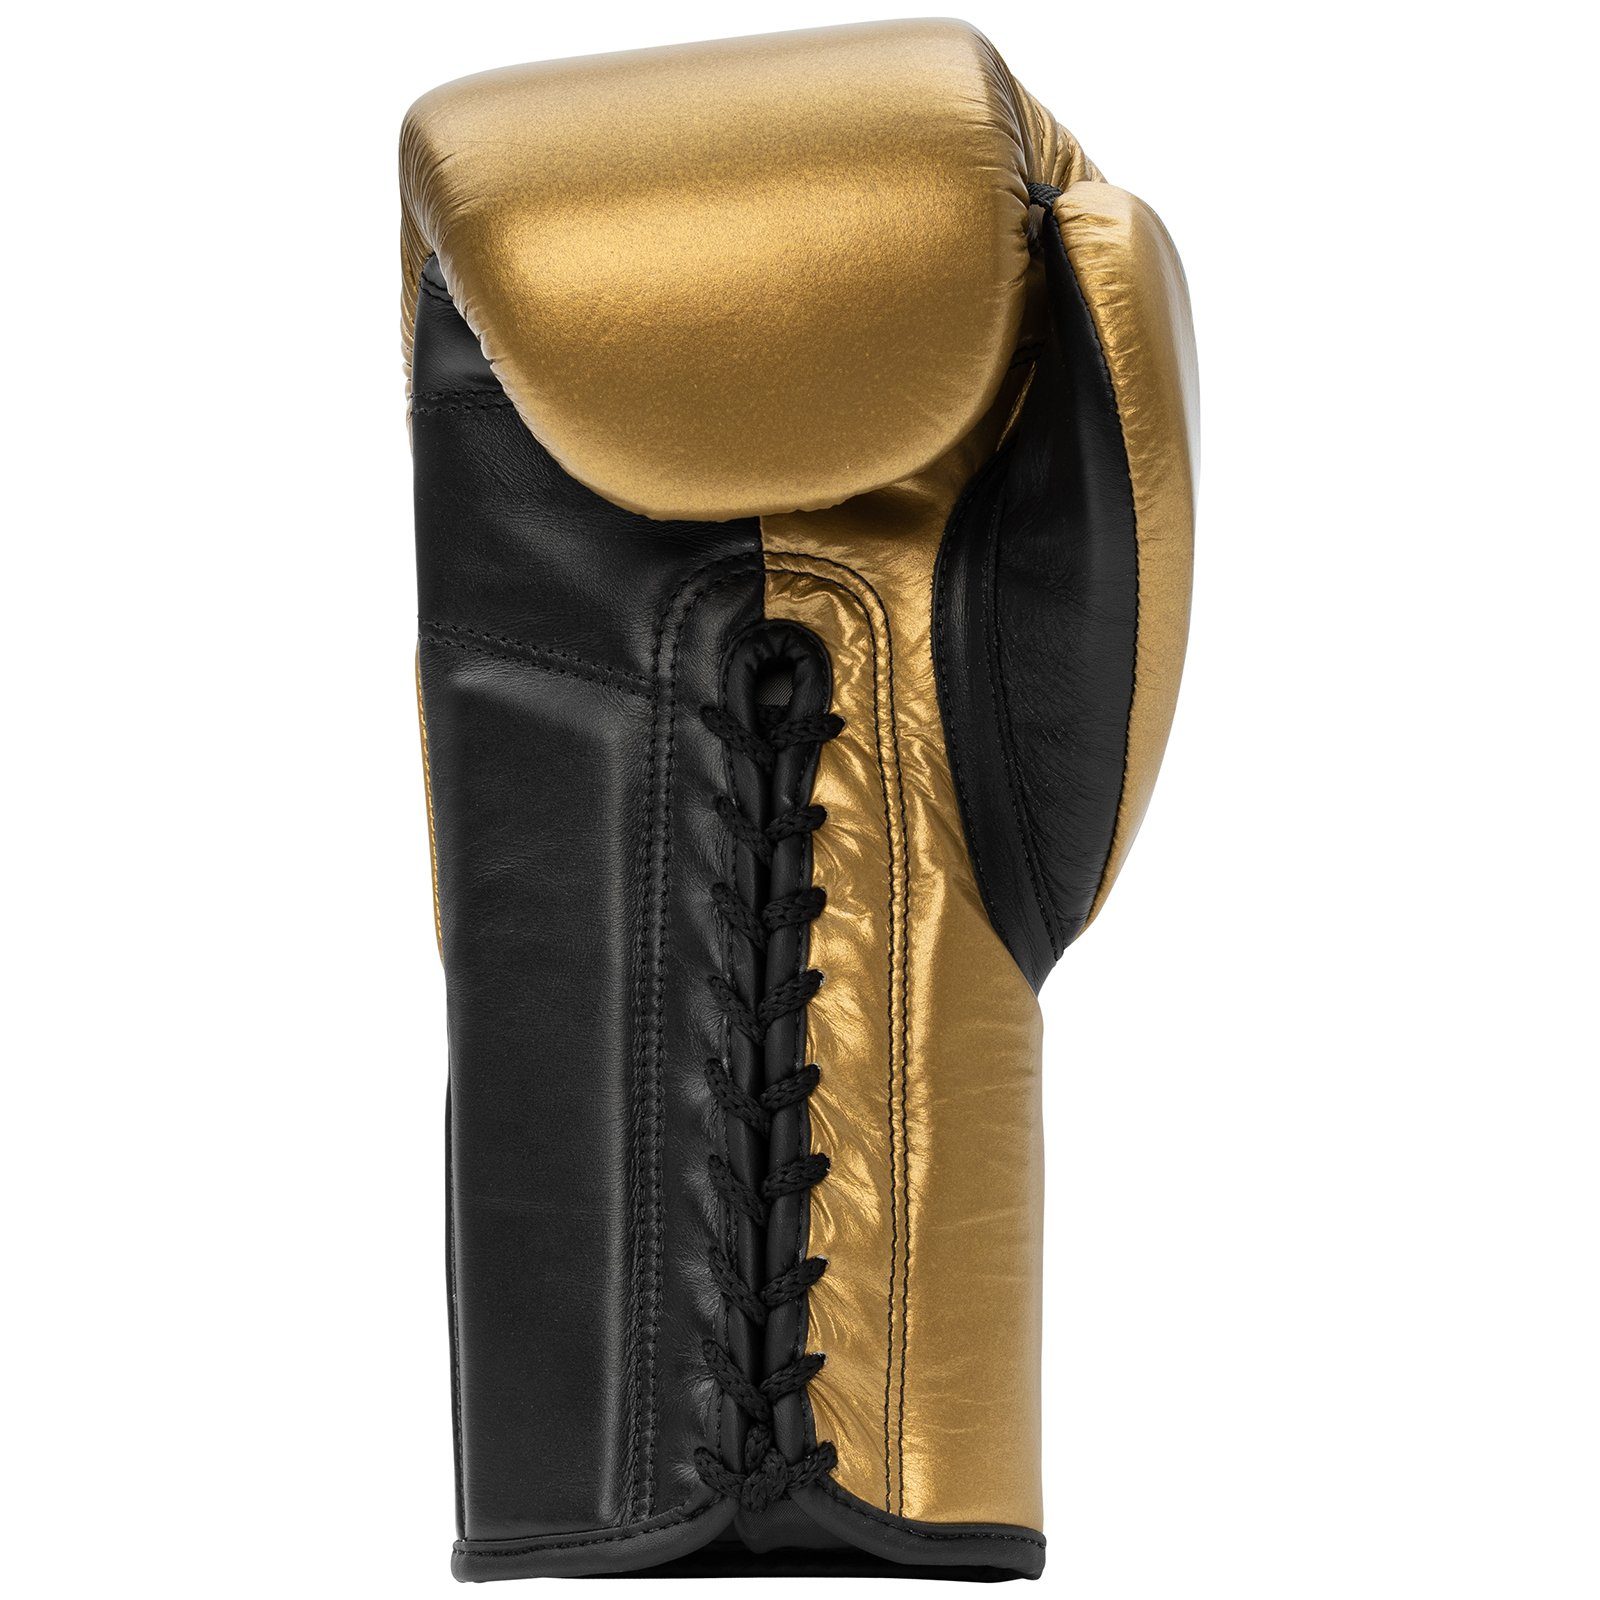 Gold/Black TYPHOON Benlee Boxhandschuhe Marciano Rocky